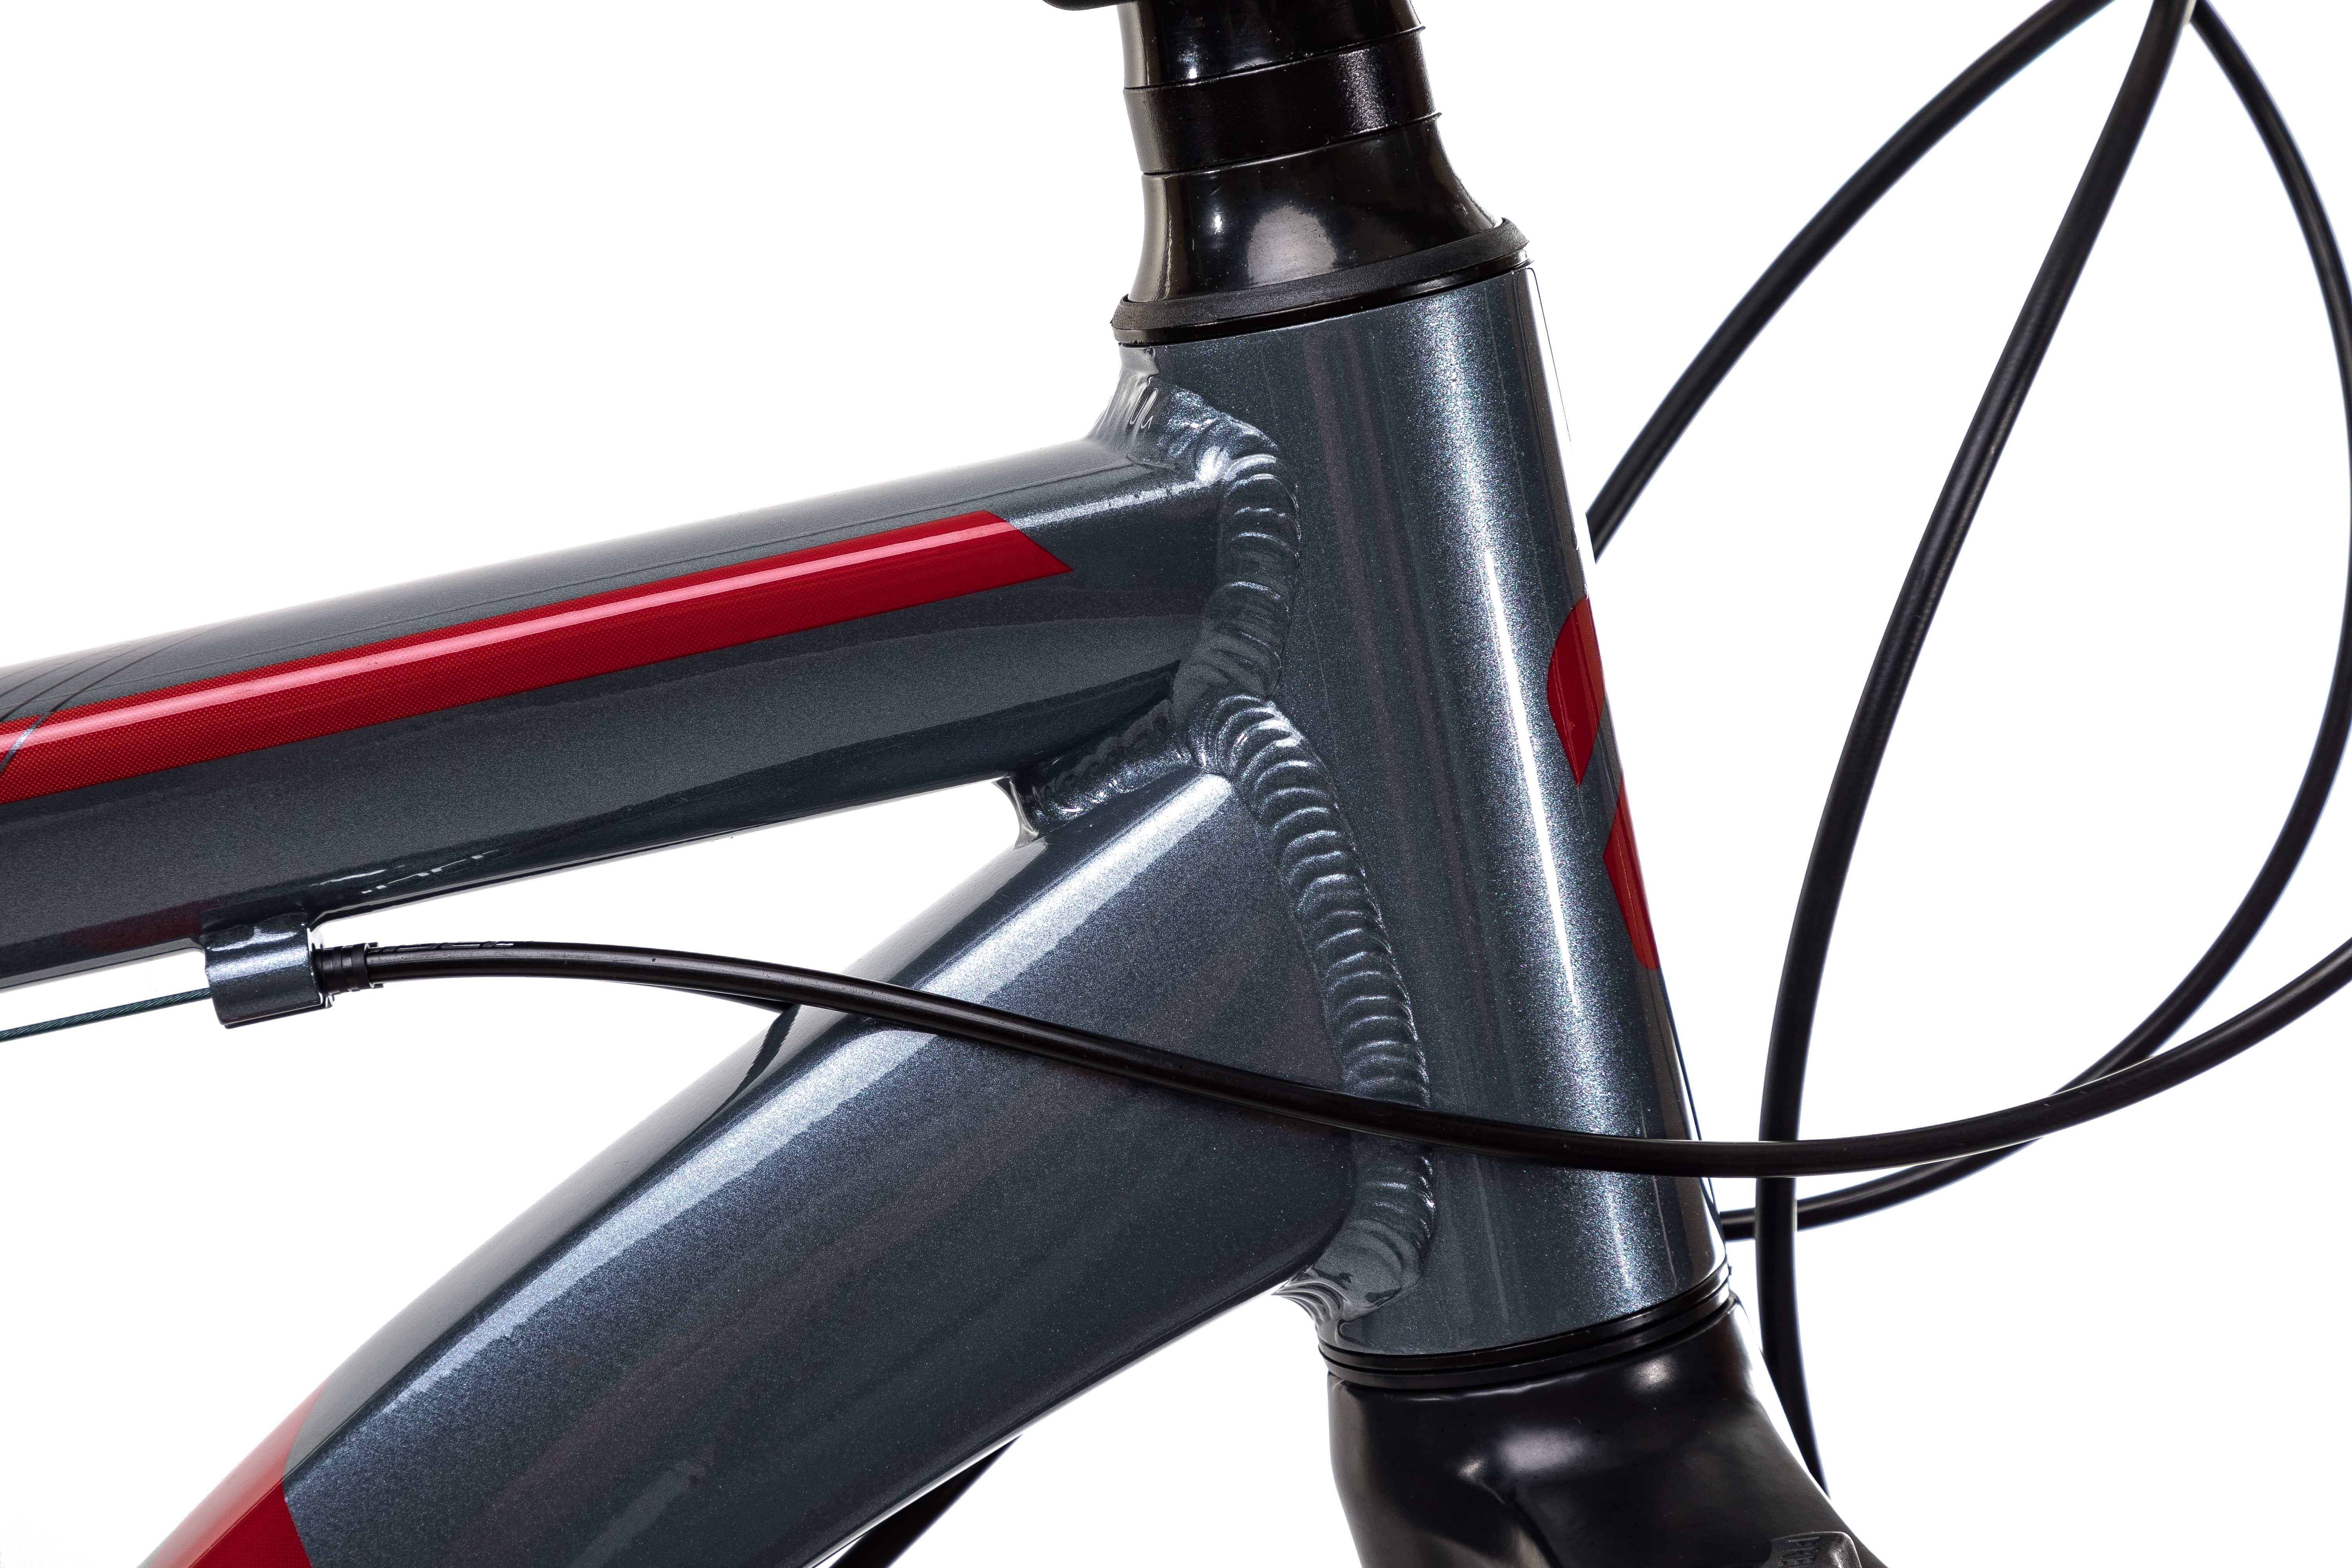 Велосипед Aspect STIMUL 27.5 16" Серо-оранжевый (2022)